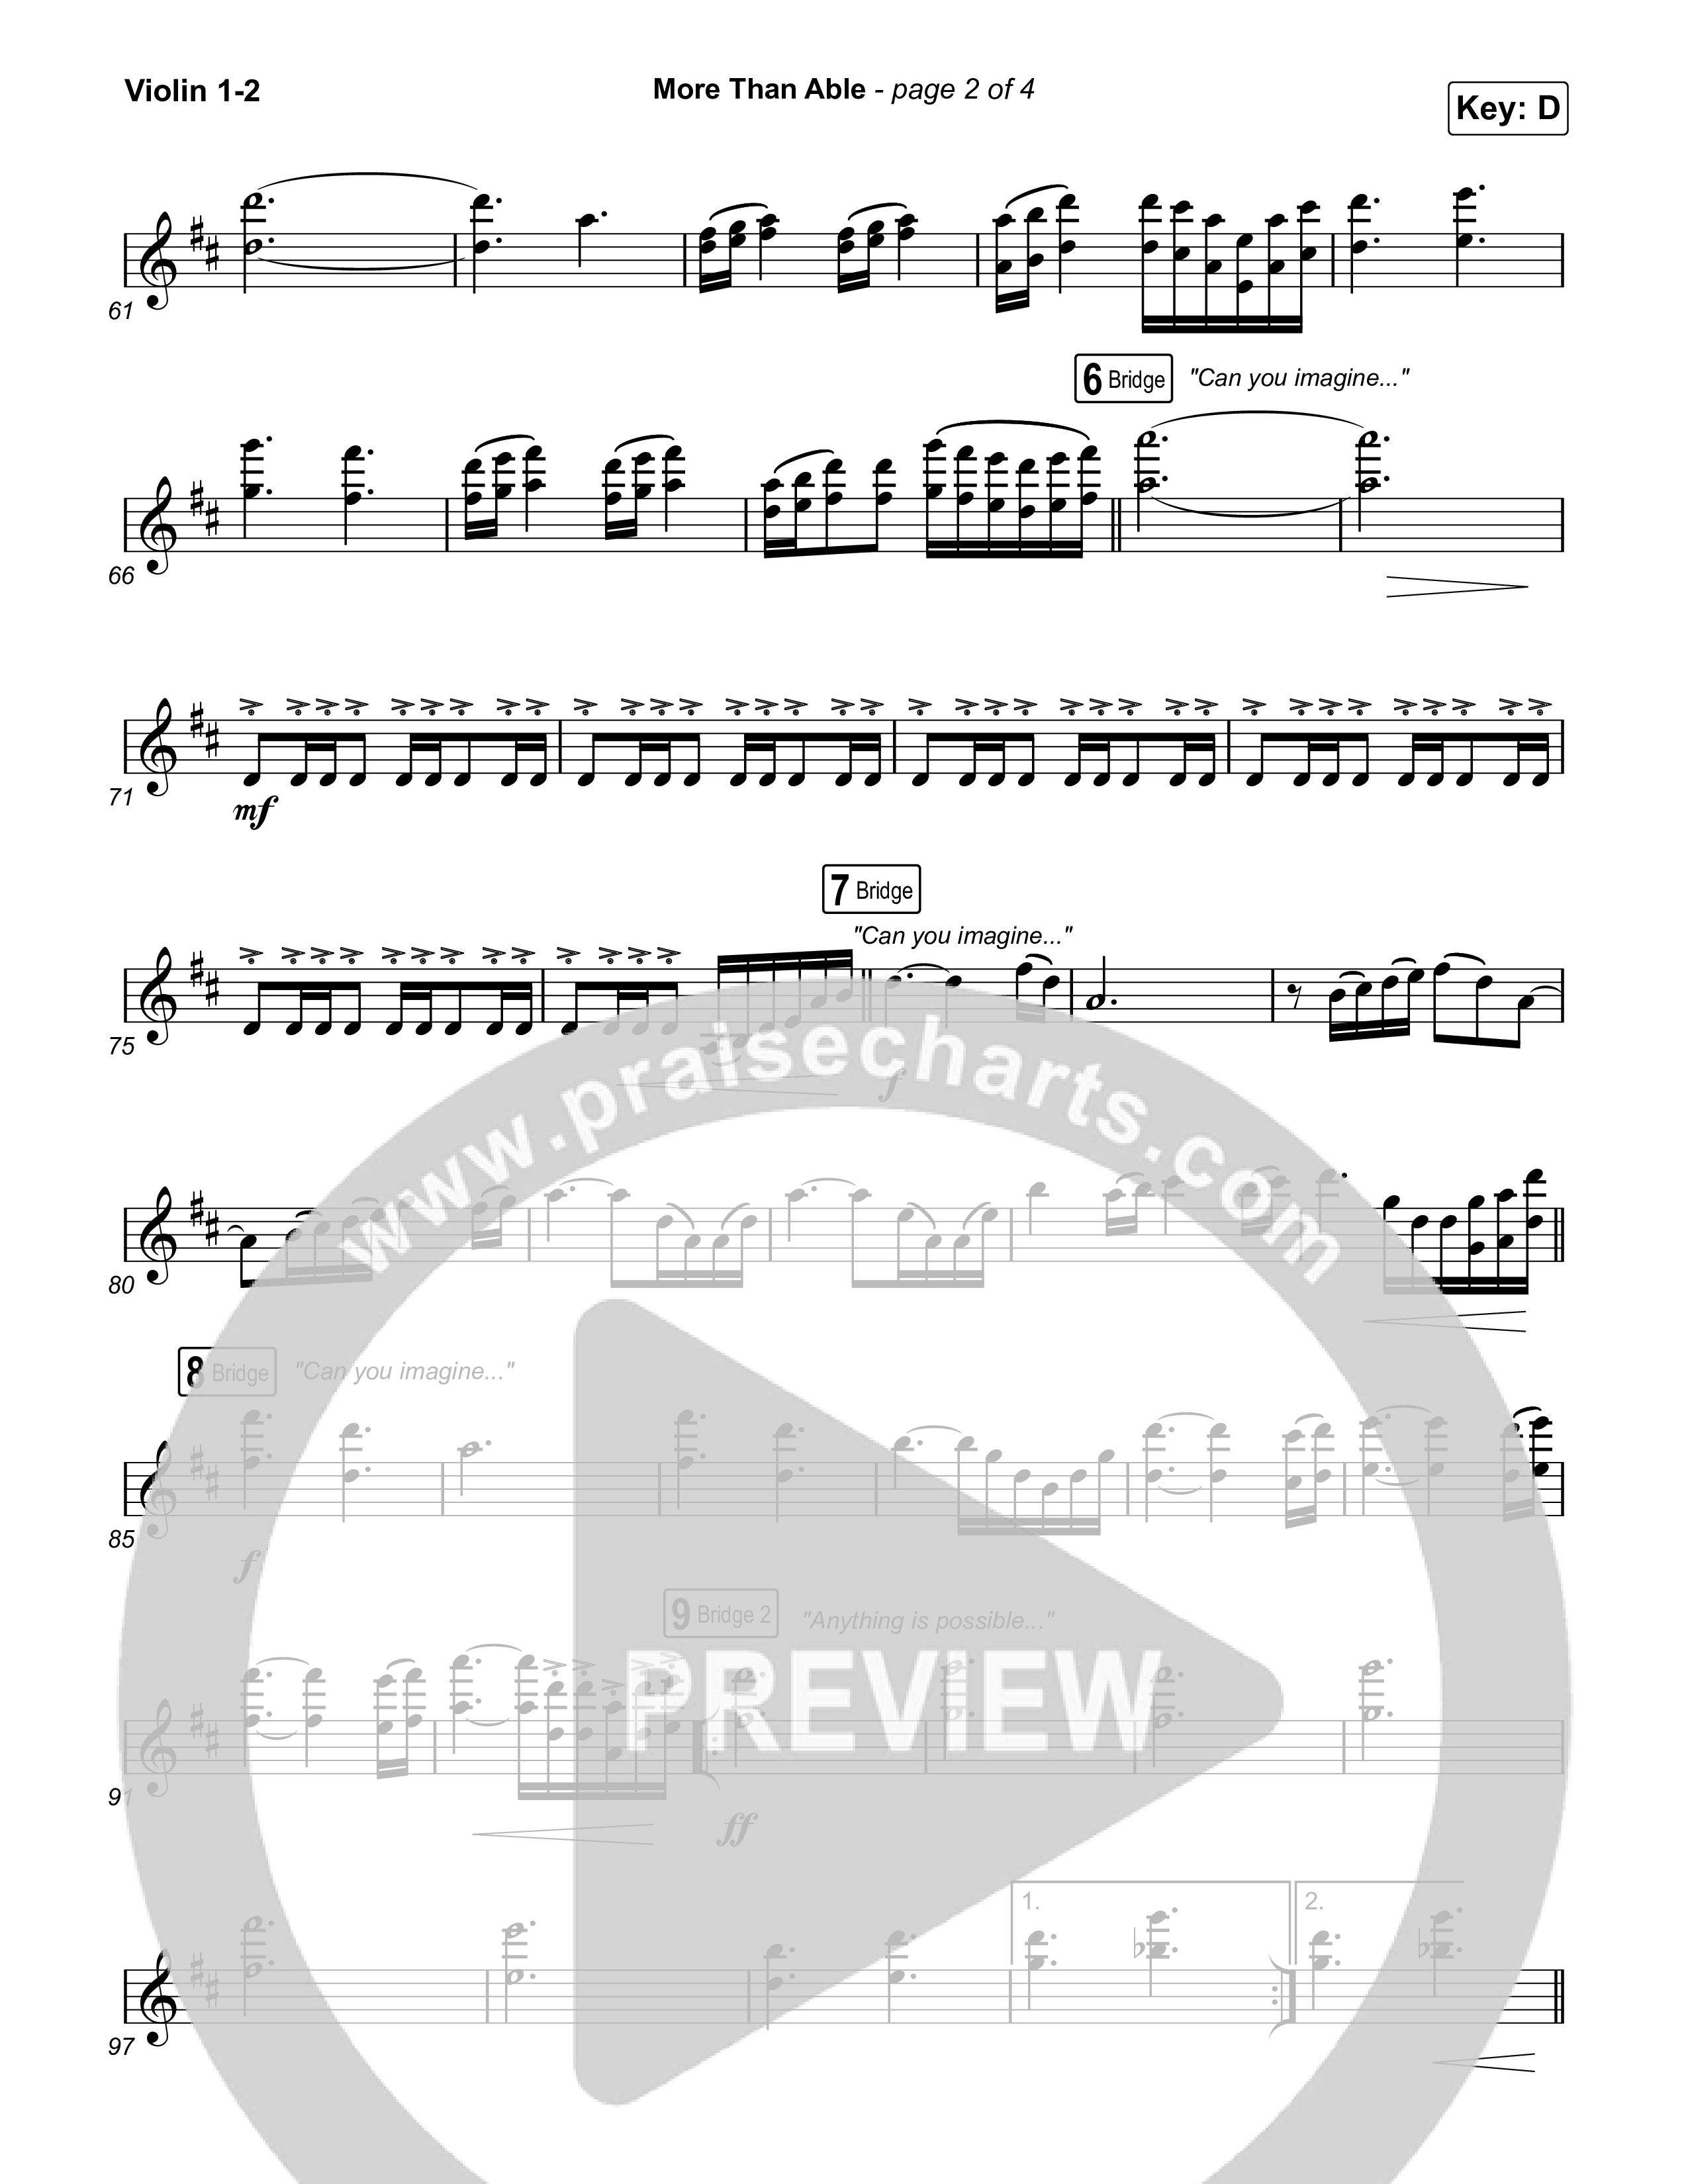 More Than Able Violin 1,2 (Maverick City Music / Tasha Cobbs Leonard)